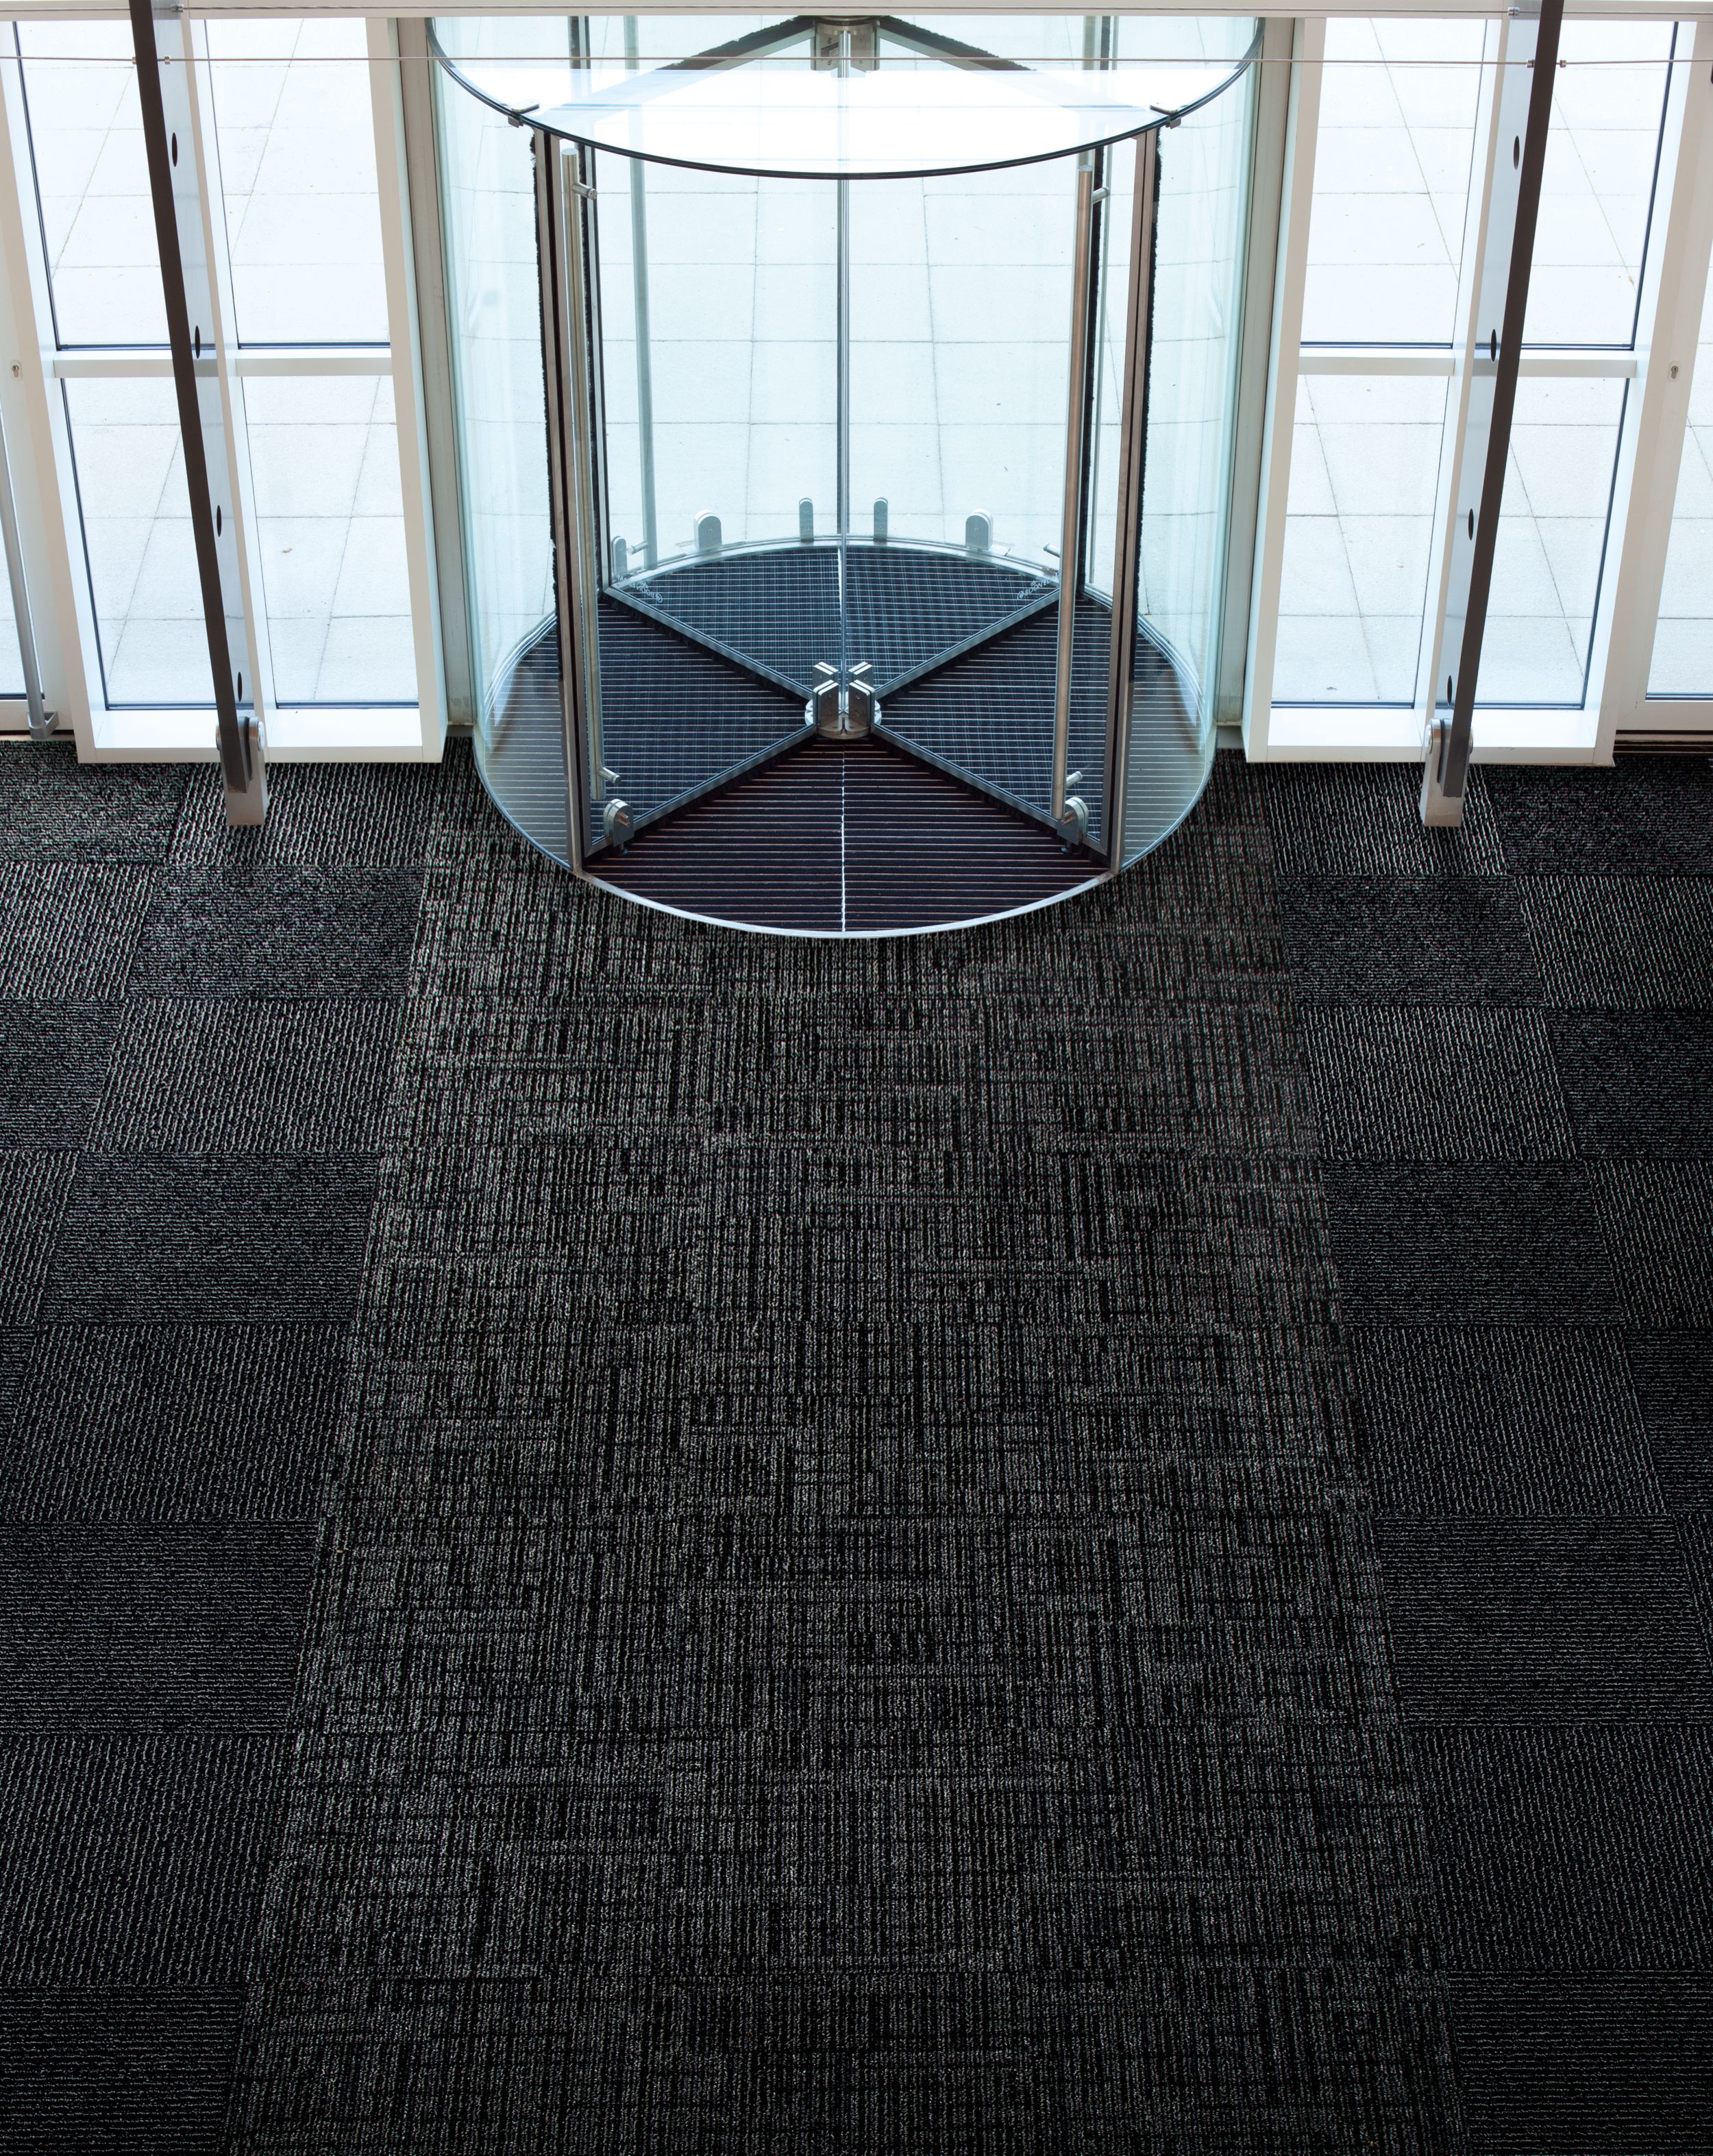 Interface SR699 and SR899 carpet tile in entryway with revolving door imagen número 3